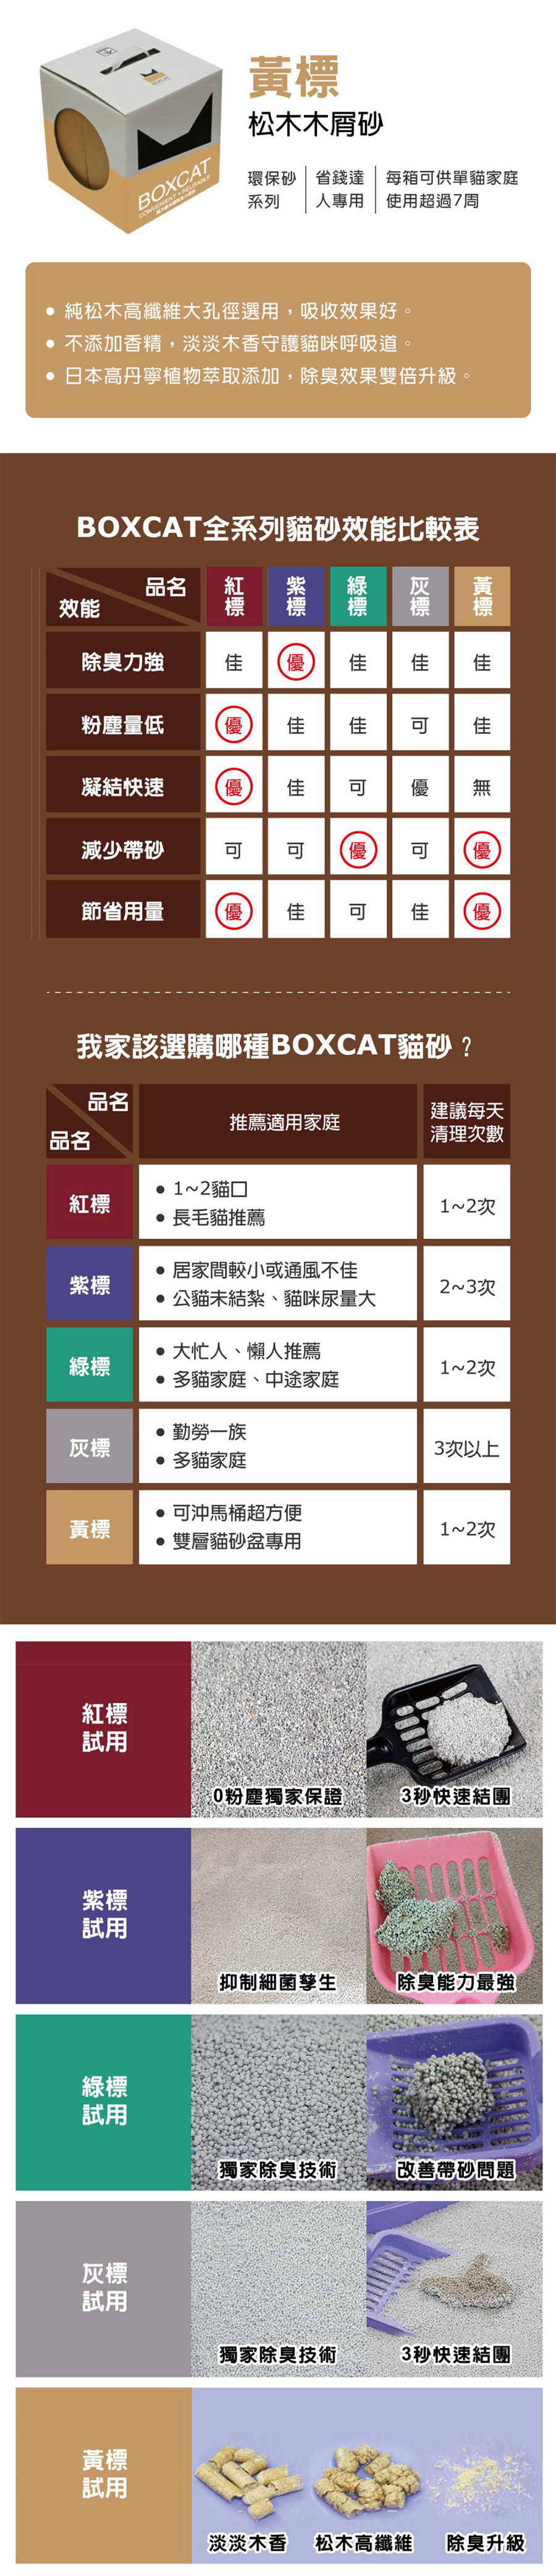 BOXCAT-紫標 威力除臭大球砂 12L(1~2貓咪家庭推薦)